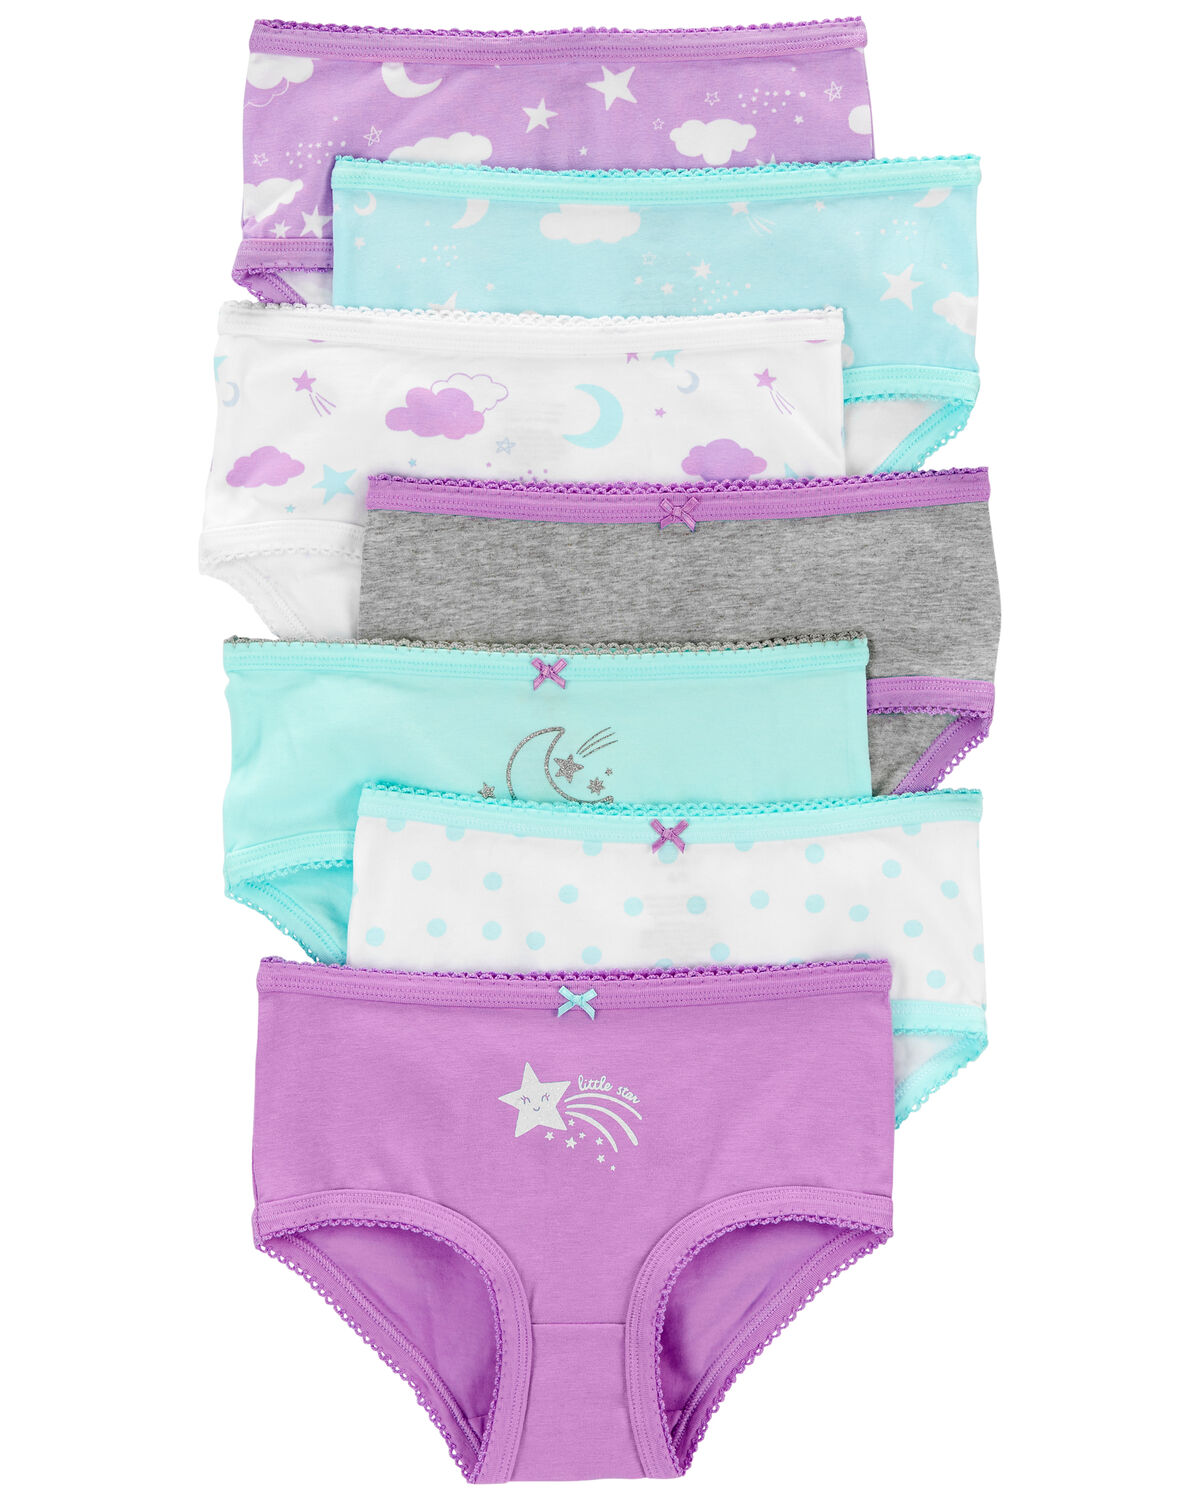 Buy 6 Pack Little Girl Underwear Cotton Fit Age 1-7, Baby Girls